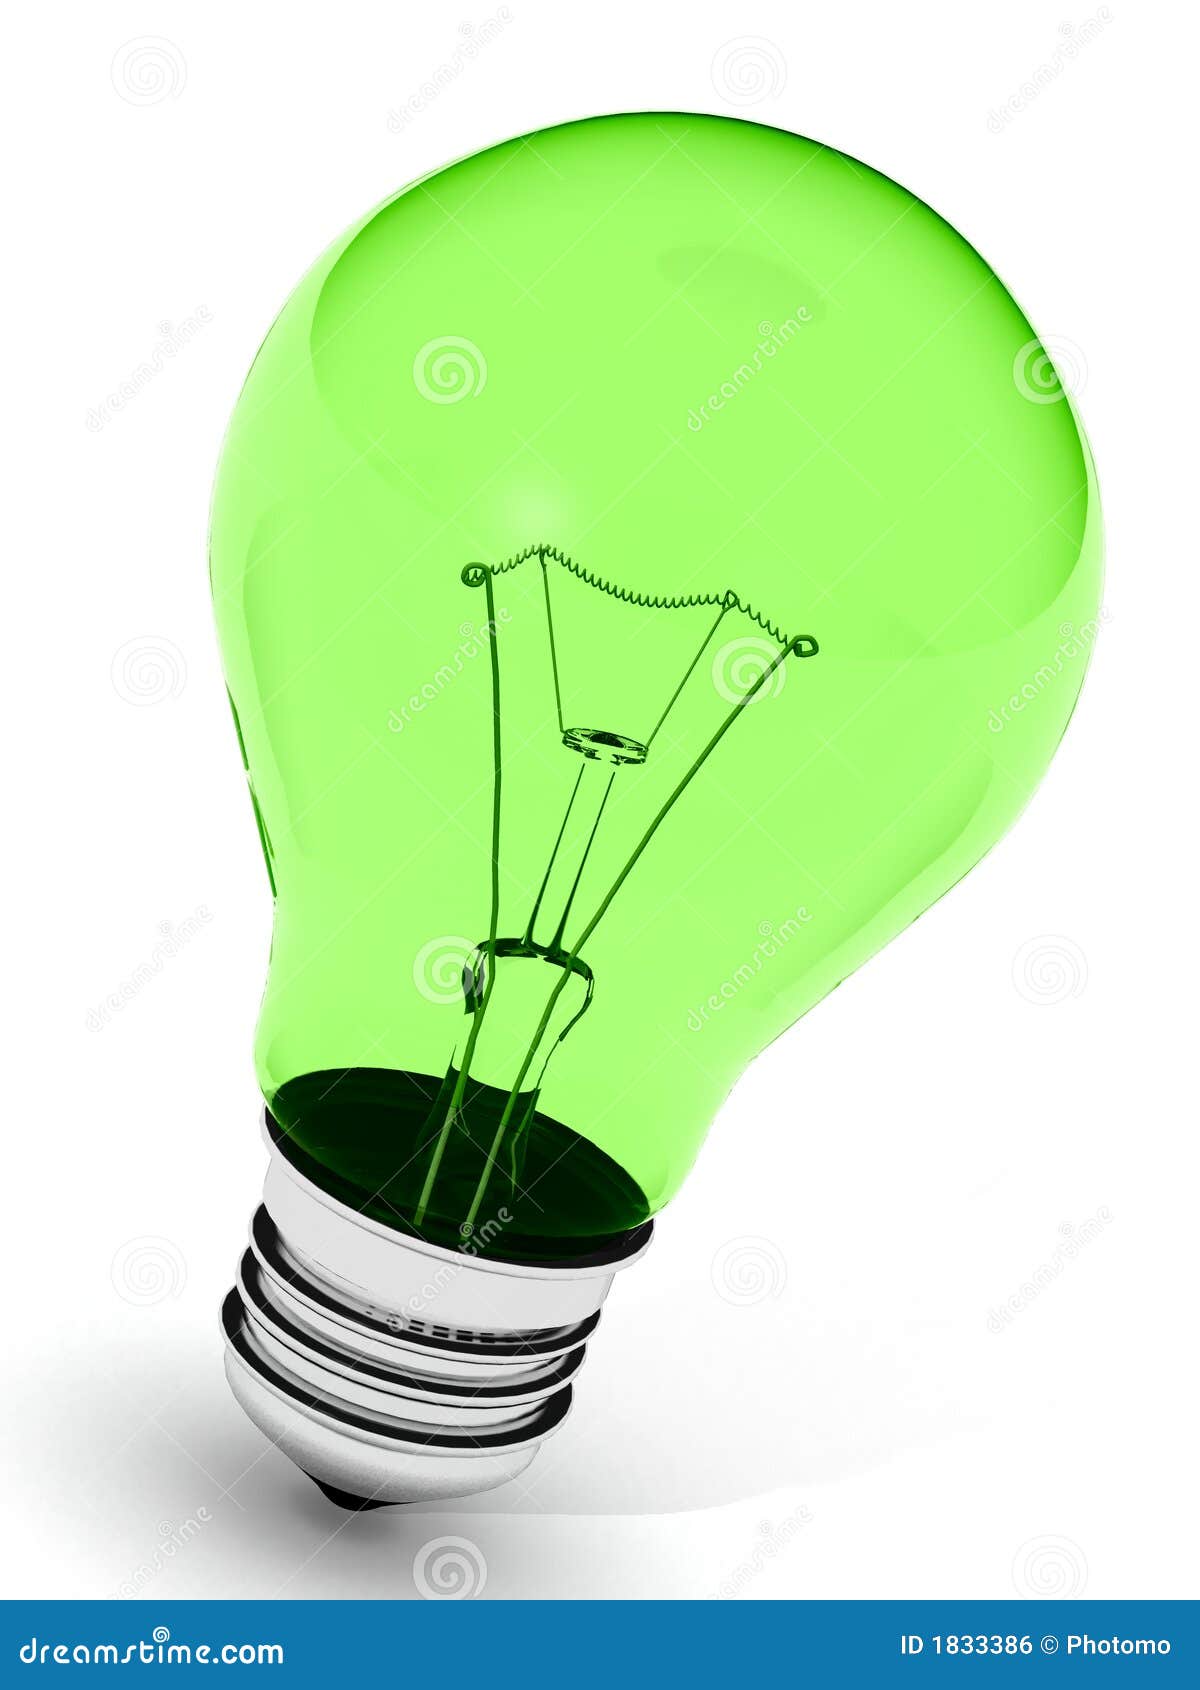 green incandescent light bulb